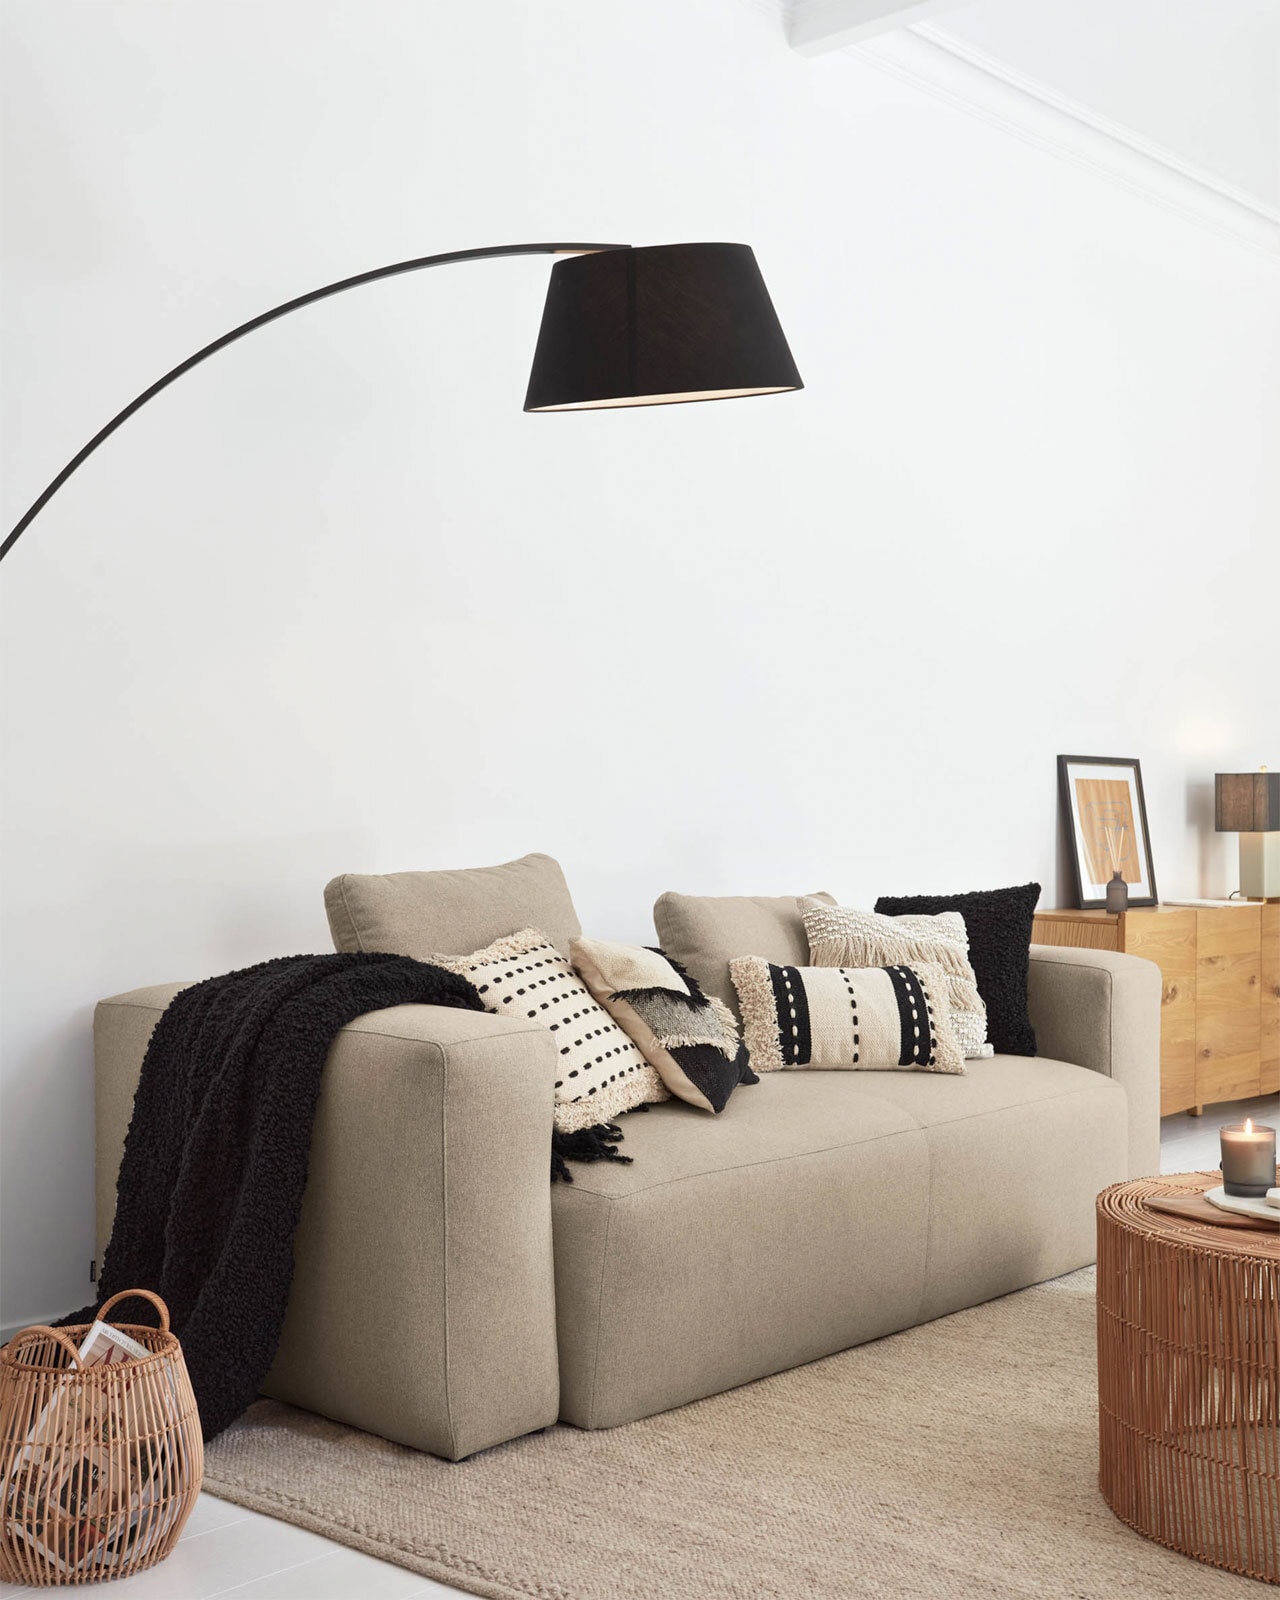 Kave Home Sofa BLOK 3-Sitzer beige